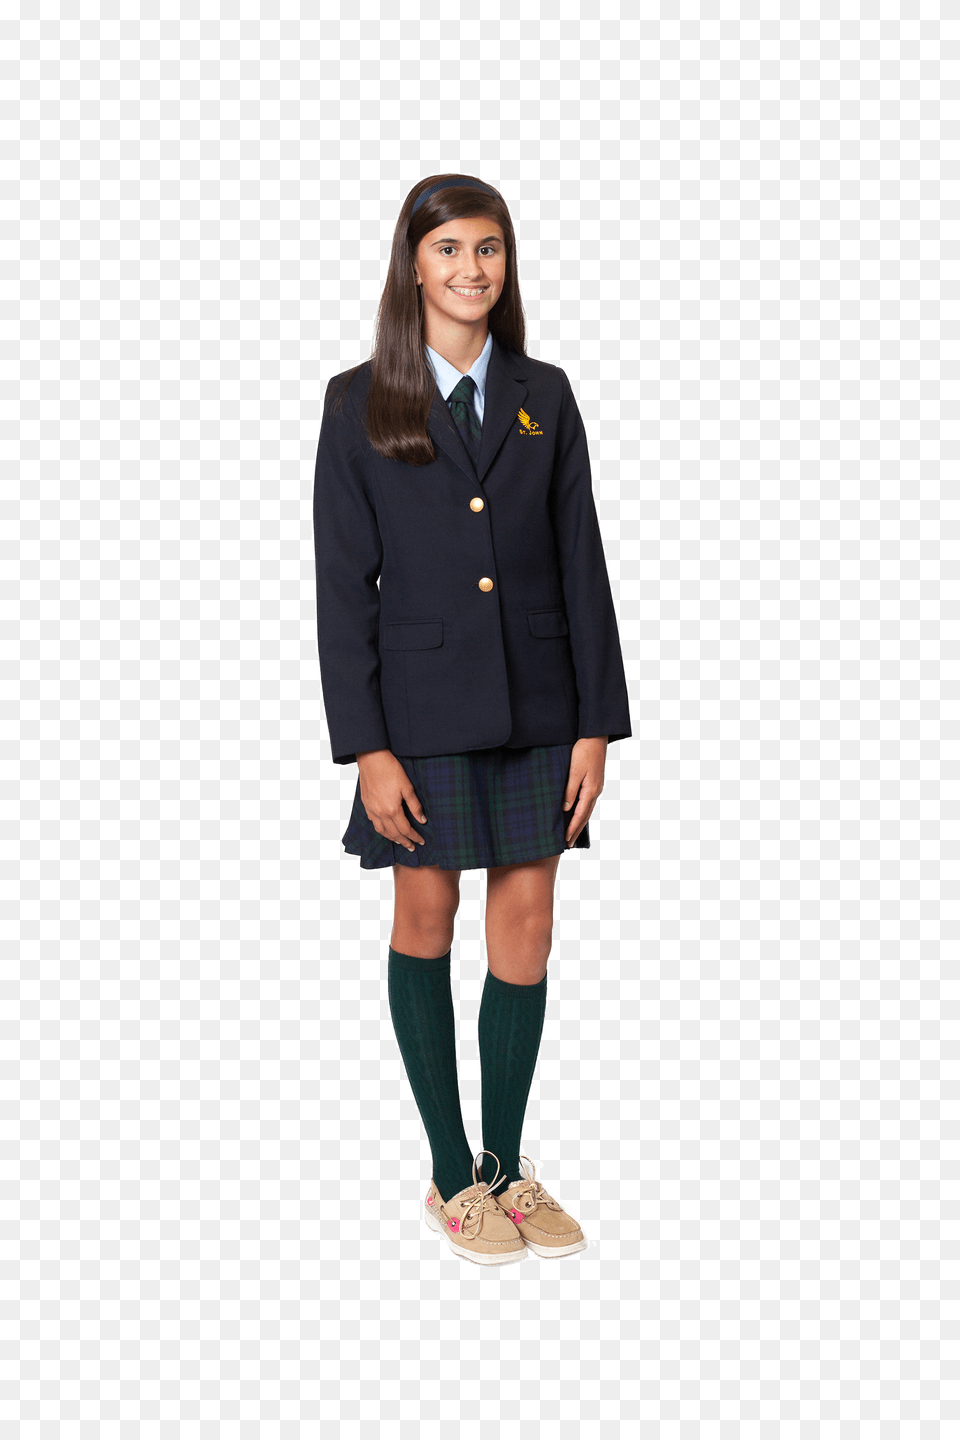 Clip Art Dress Code St John 2000 School Uniform, Blazer, Skirt, Jacket, Coat Png